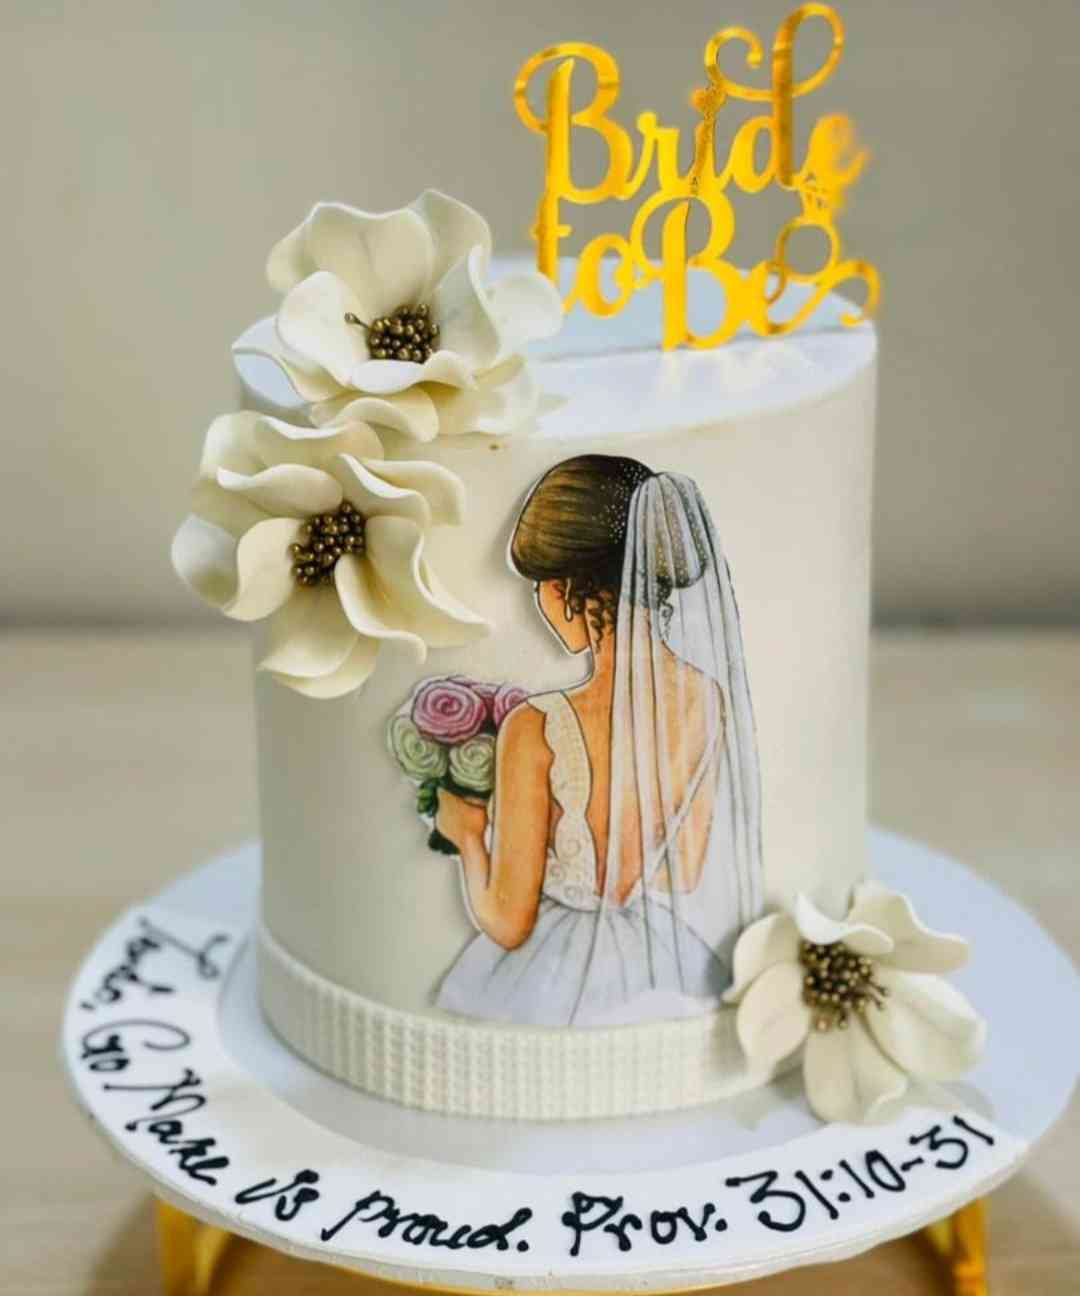 EDIBLE BRIDE TO BE CAKE 11